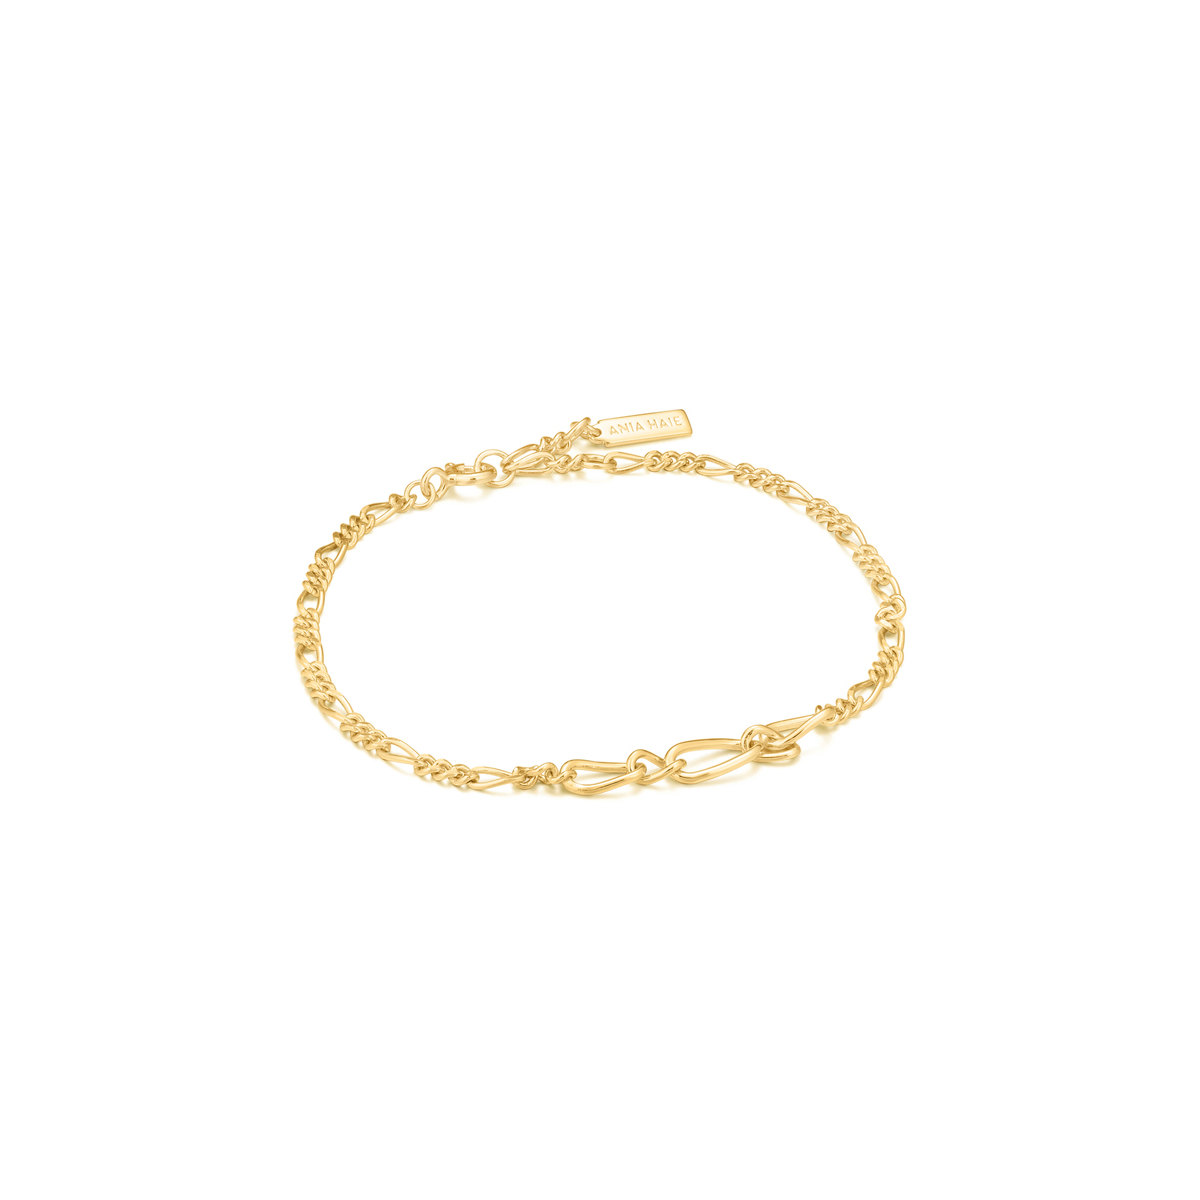 Ania Haie Chain Reaction Shiny Gold Figaro Chain Bracelet B021-03G